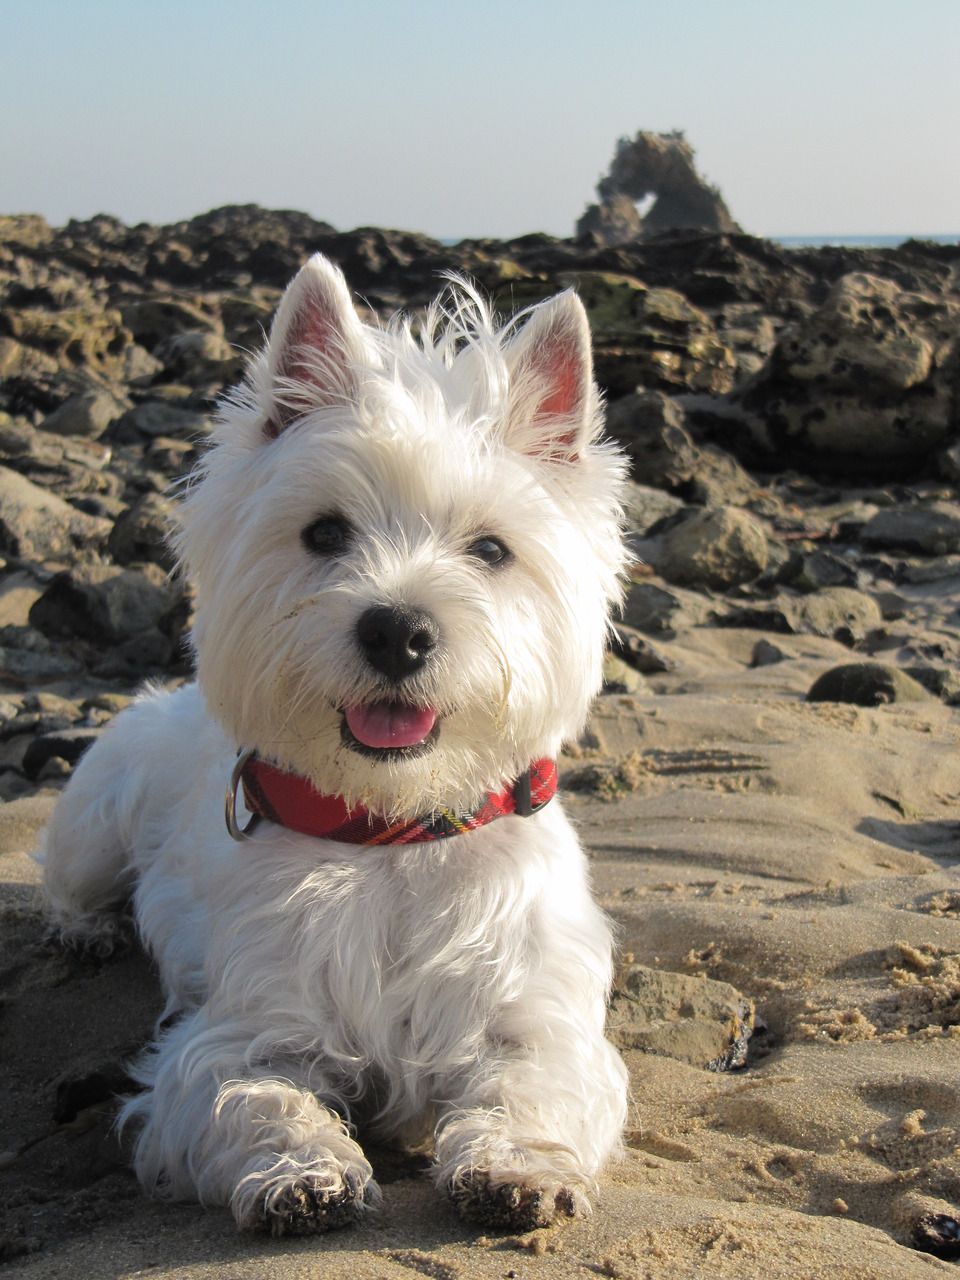 West Highland White Terrier - Information, Photos ...